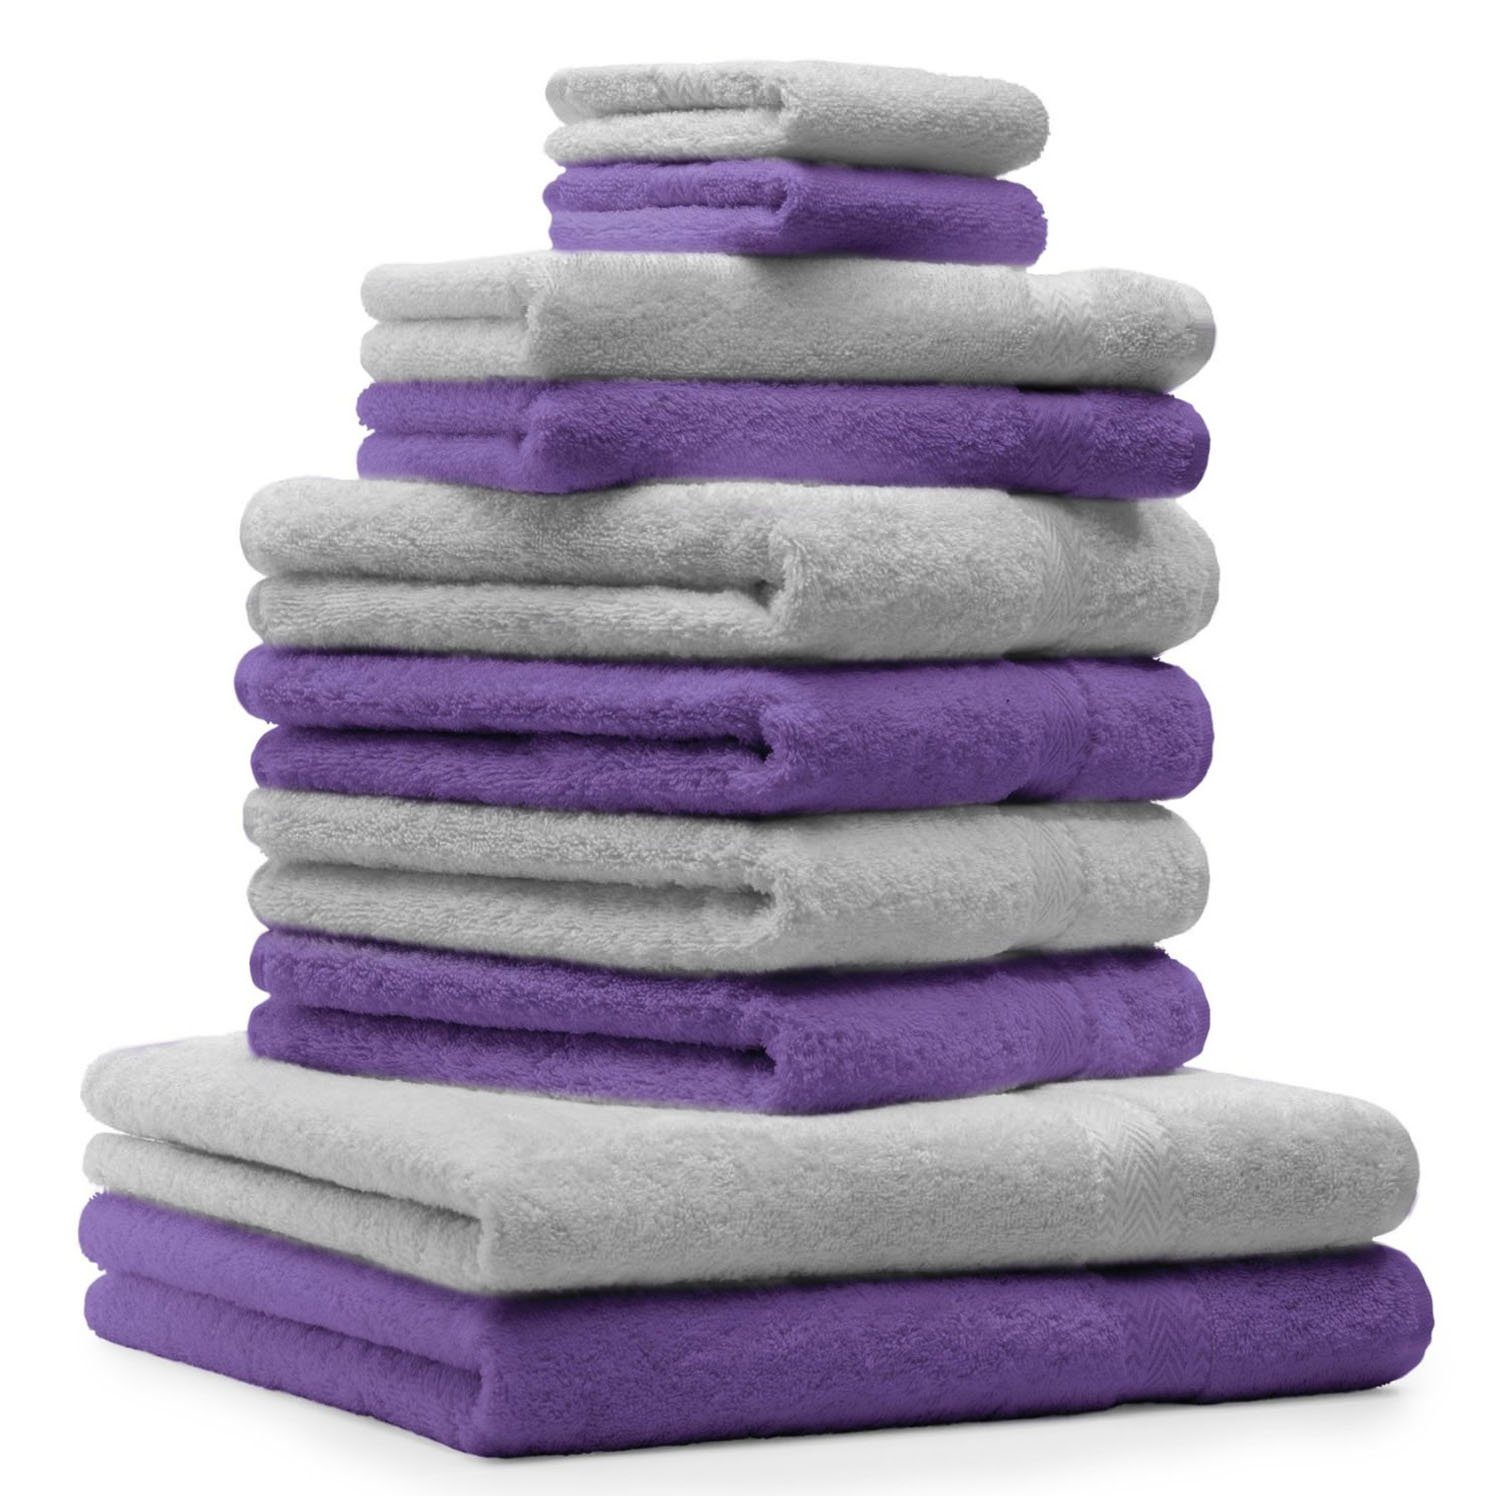 Betz Handtuch Set 10-TLG. Handtuch-Set Classic Farbe lila und silbergrau, 100% Baumwolle